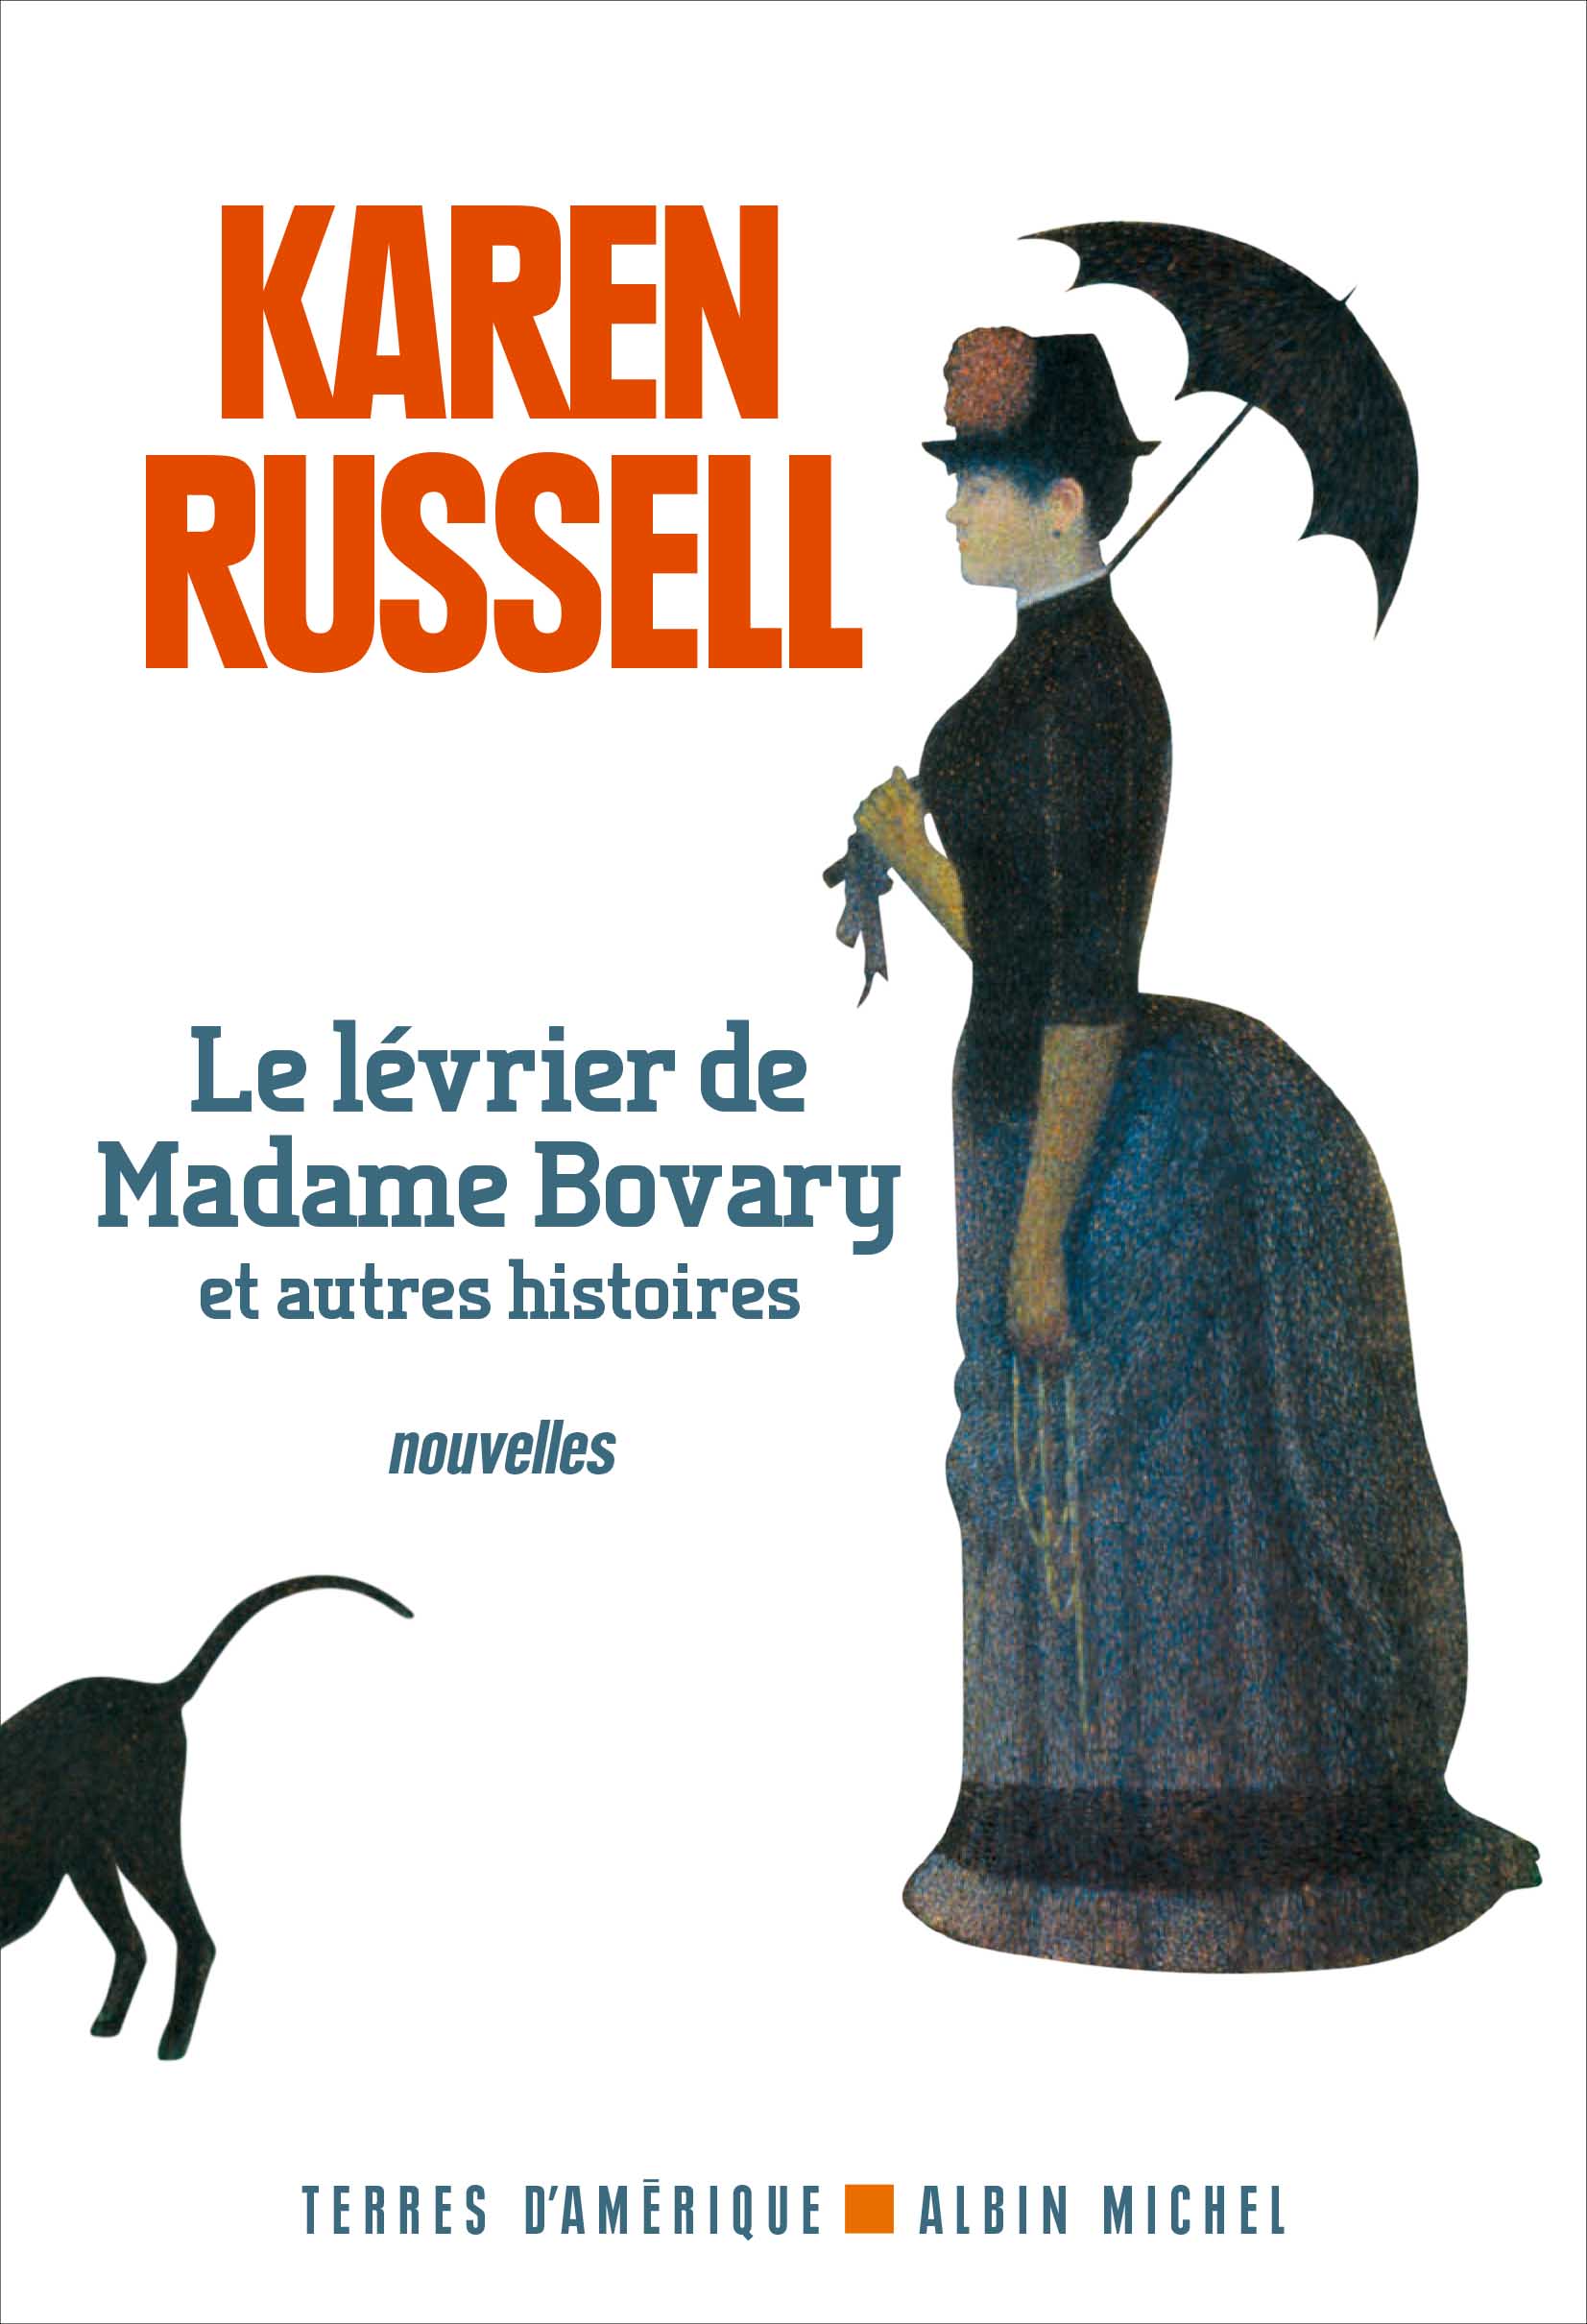 RUSSELL Karen Le lévrier de Madame Bovary couv ok 160921